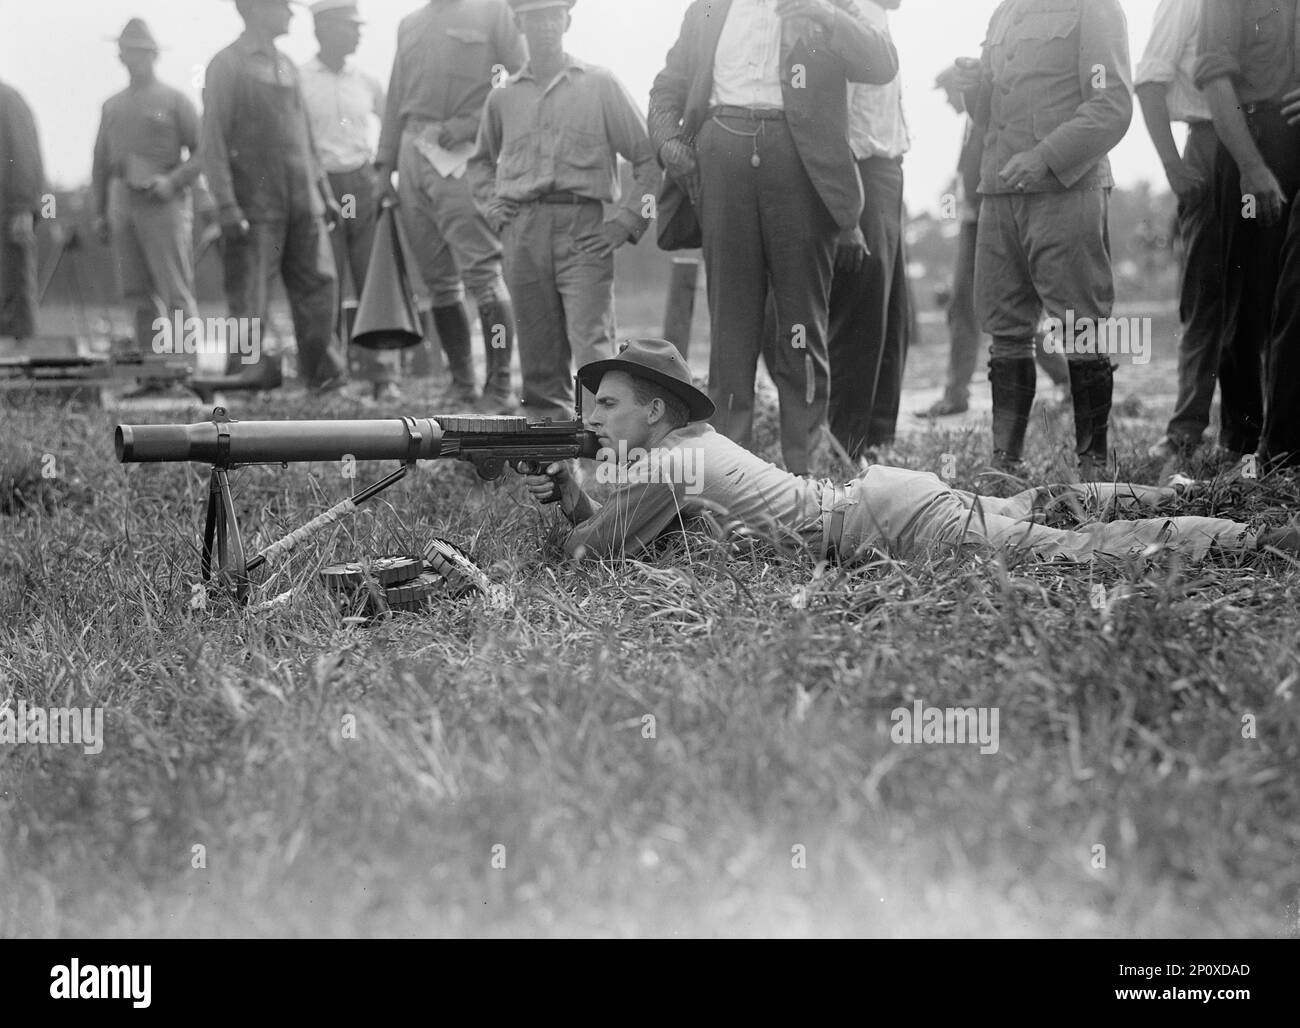 Marine Corps Rifle Range, Lewis Machine Gun Tests, 1917. Stock Photo